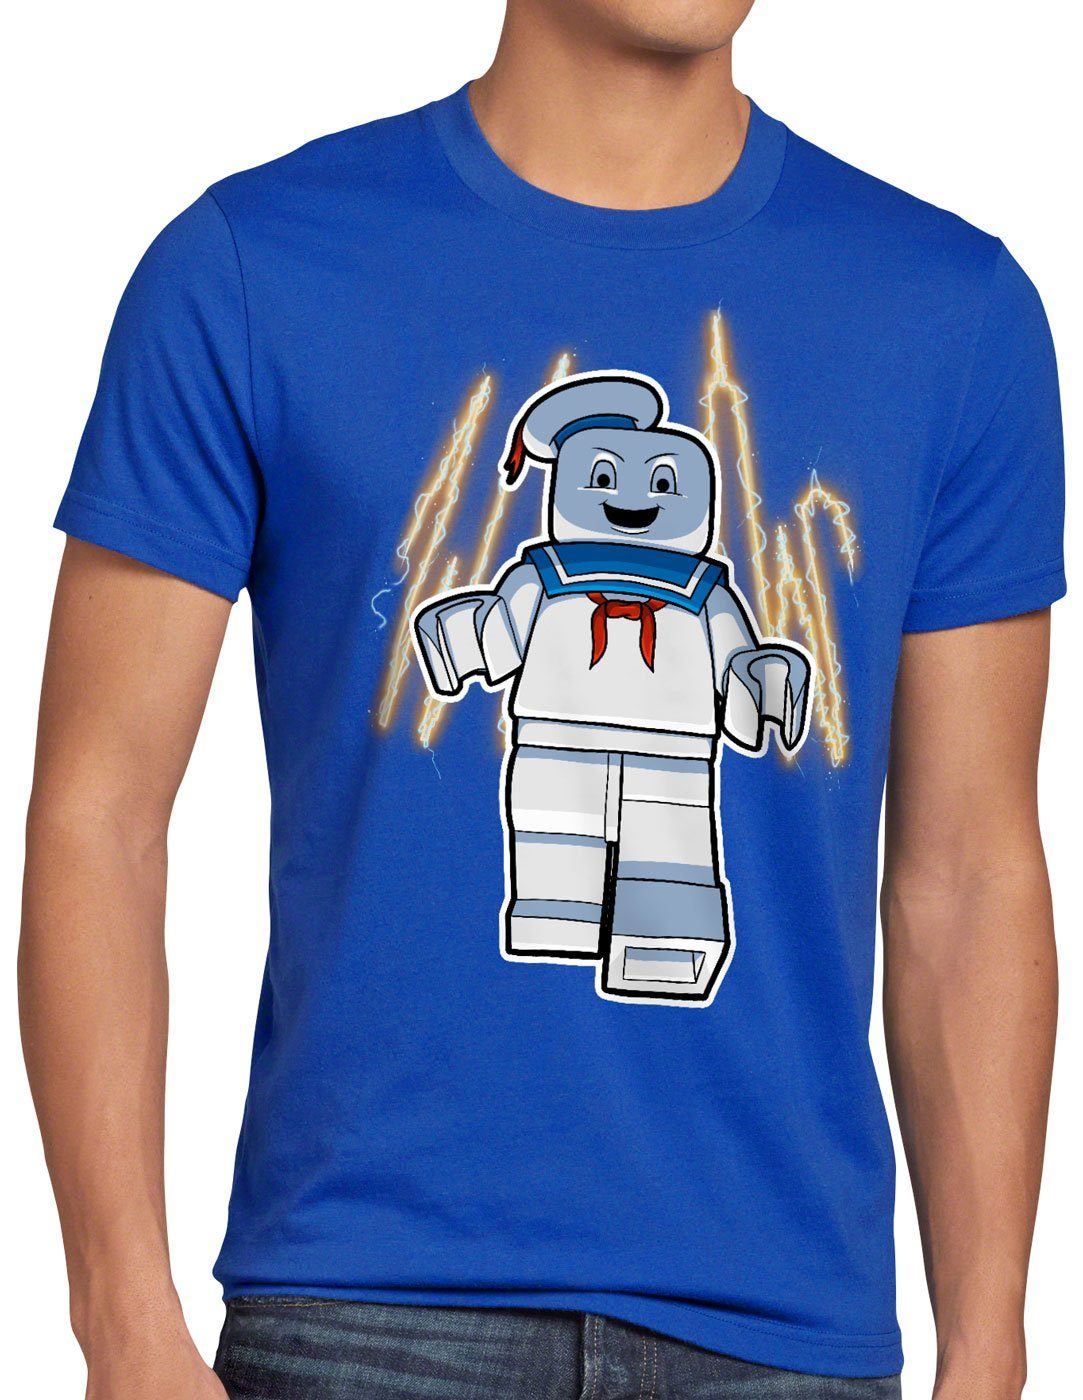 Print-Shirt blau ecto1 geisterjäger T-Shirt baustein style3 Herren Ghostbricksters